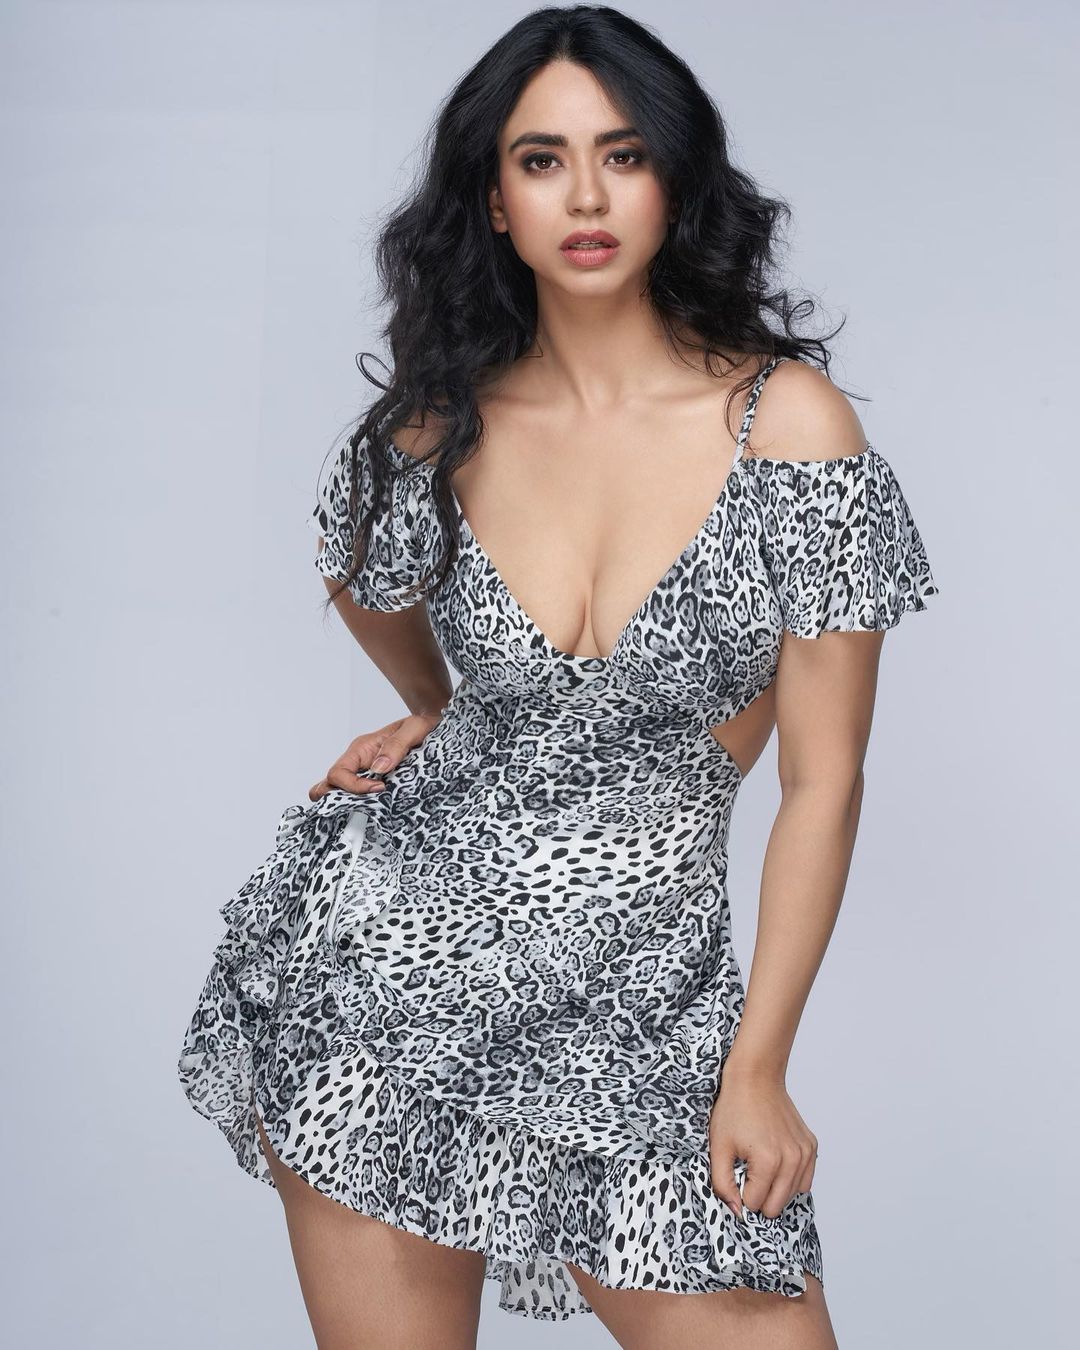 Soundarya Sharma pada usia 28 tahun dengan bralet terbuka, troll troll setelah melihat desain roknya, berkata – ini setengah gaun